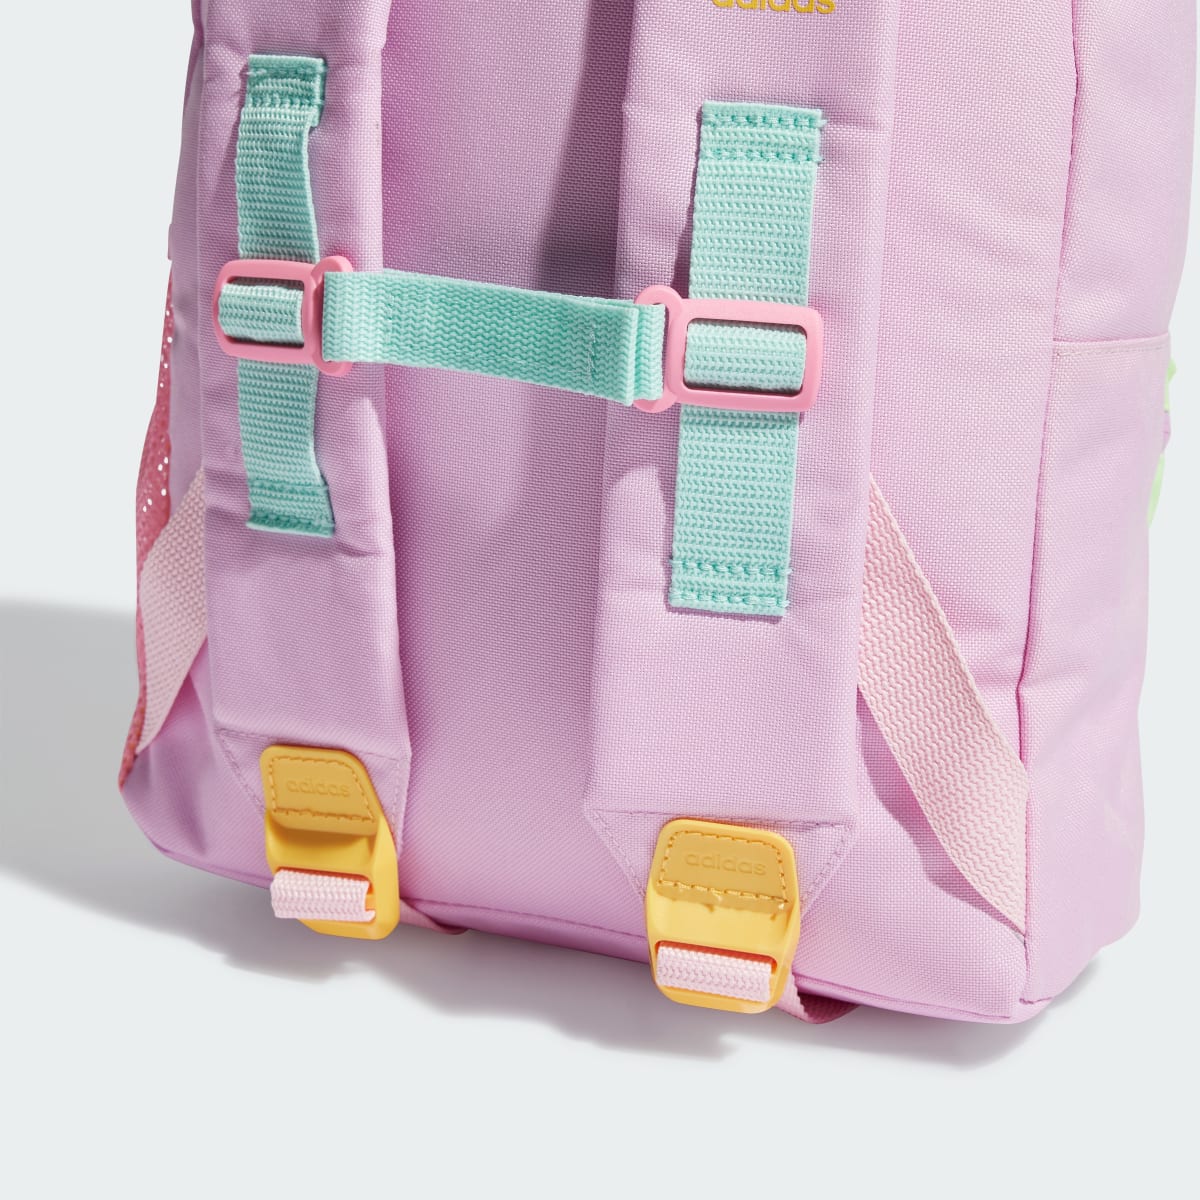 Adidas Graphic Backpack IU4632